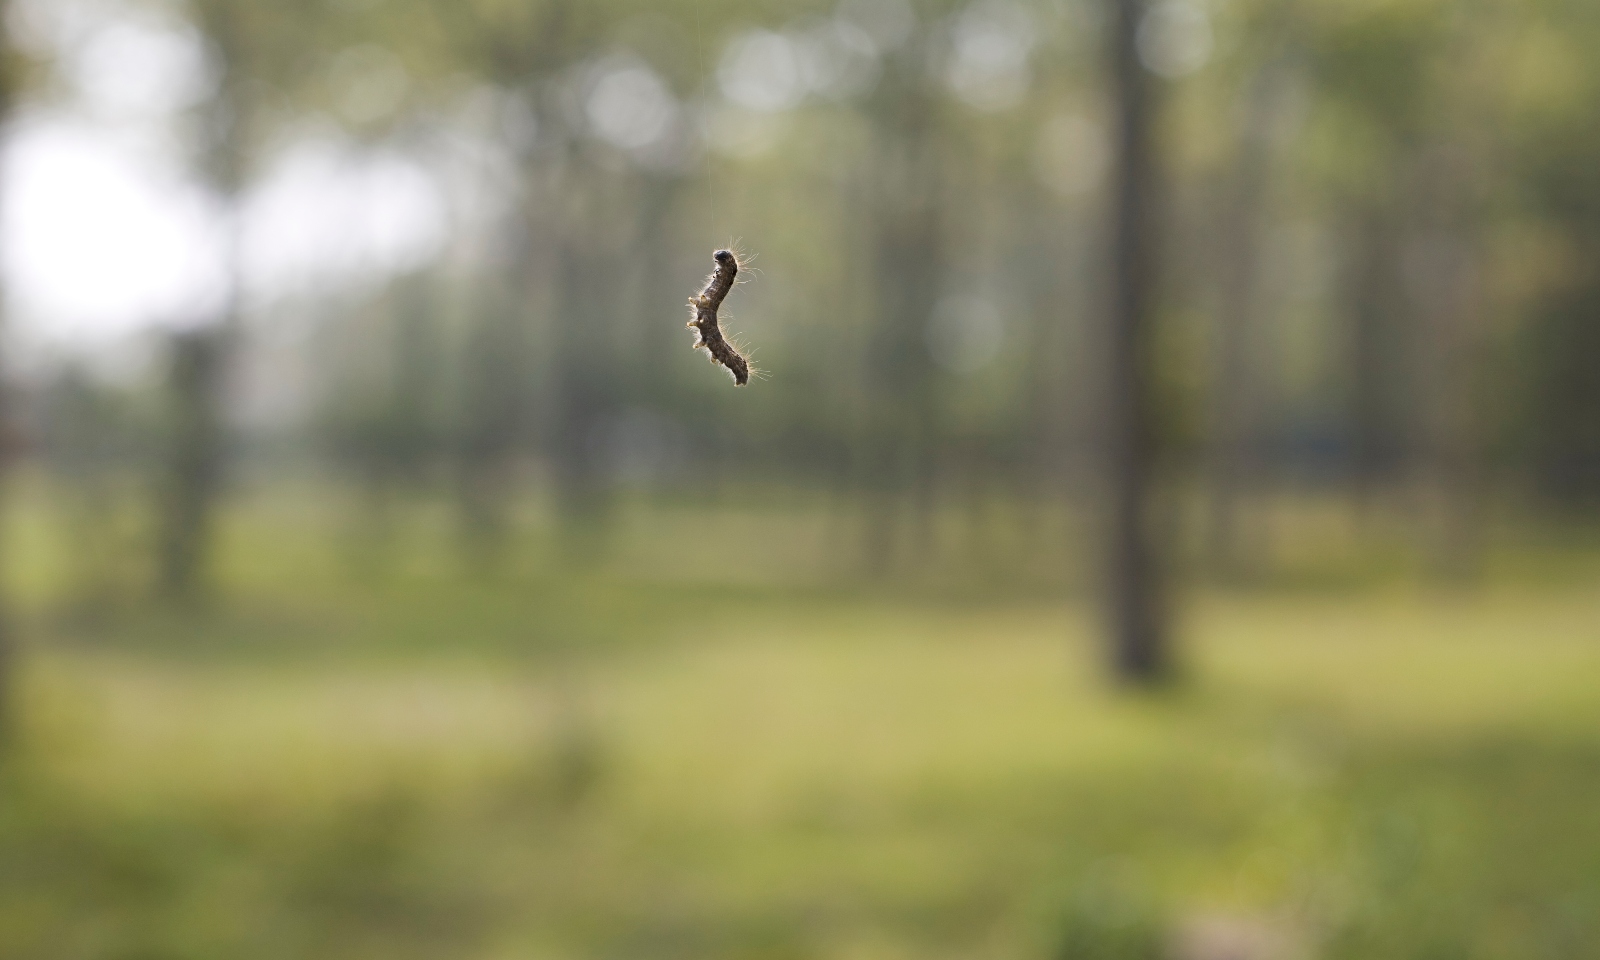 A fuzzy caterpillar hangs by a silken thread on a green wooded backdrop